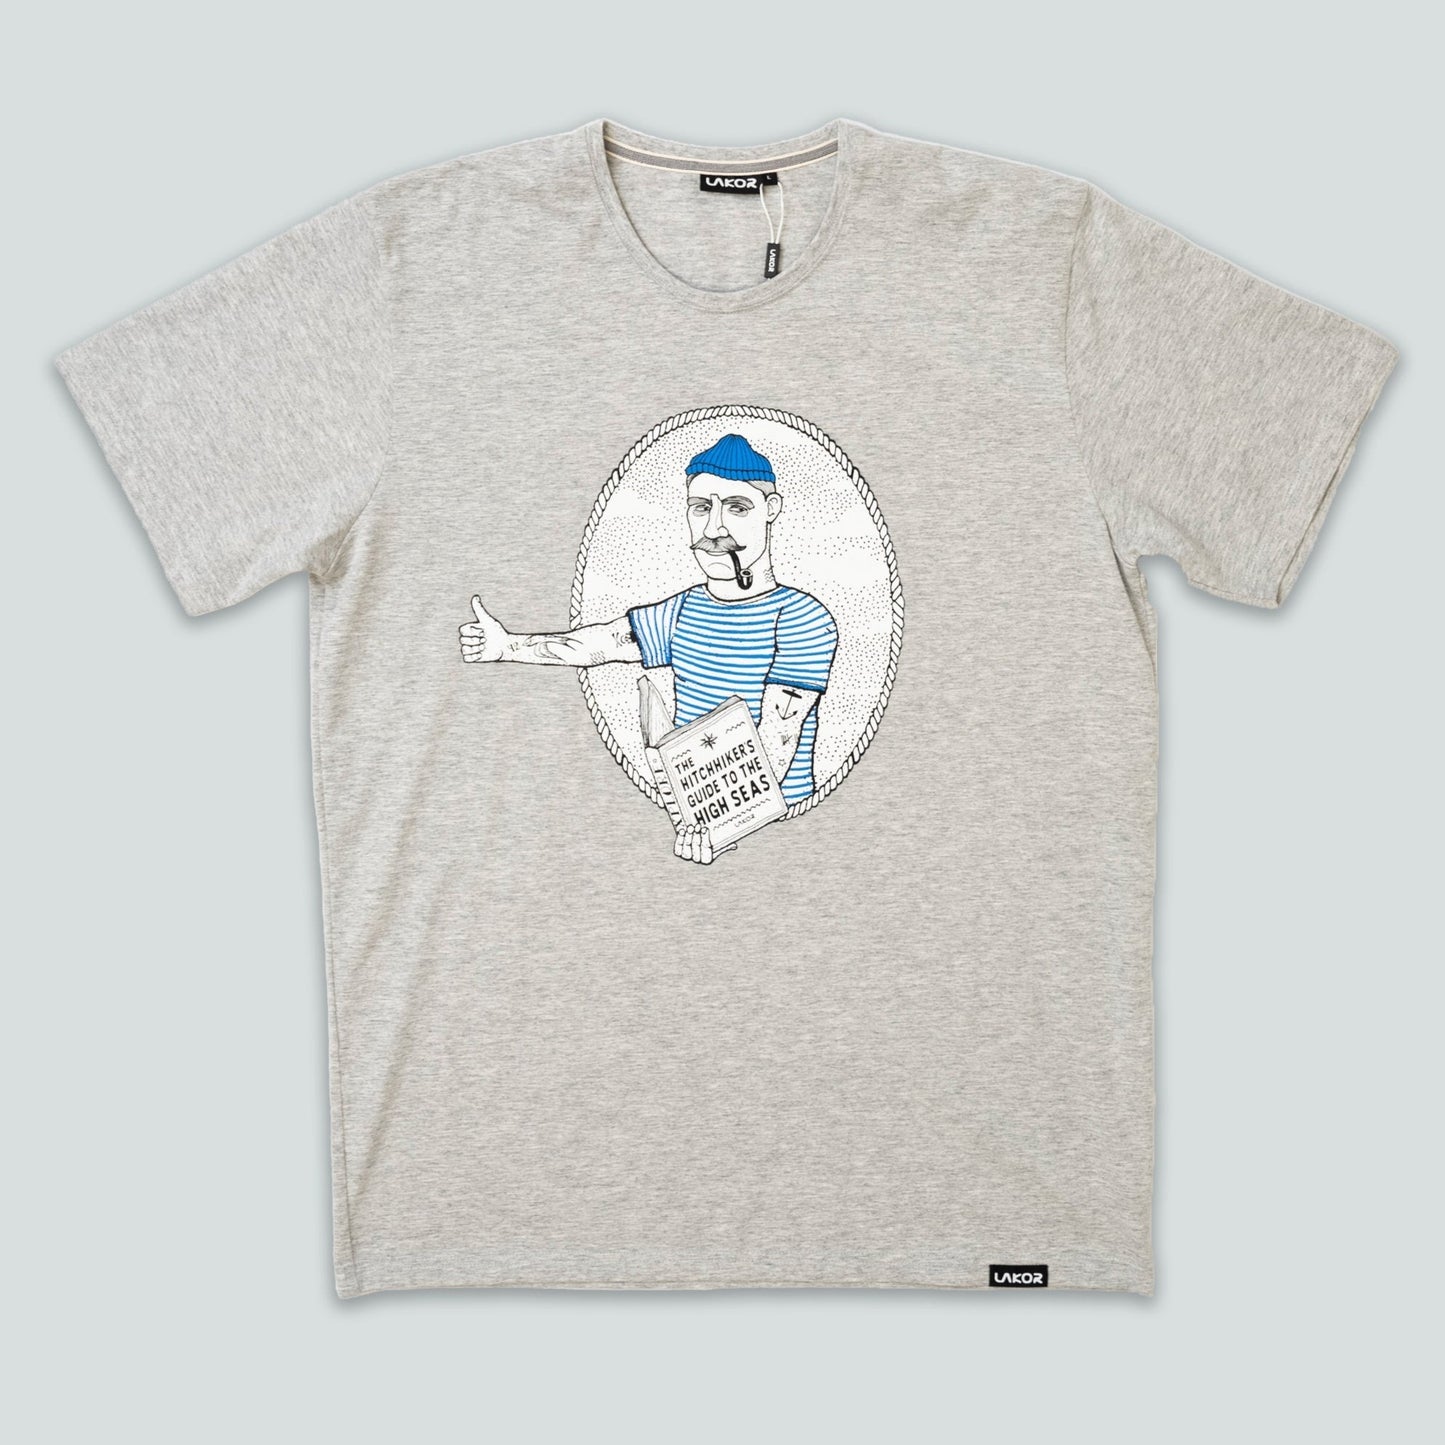 Lakor - Hitchhiker T-shirt